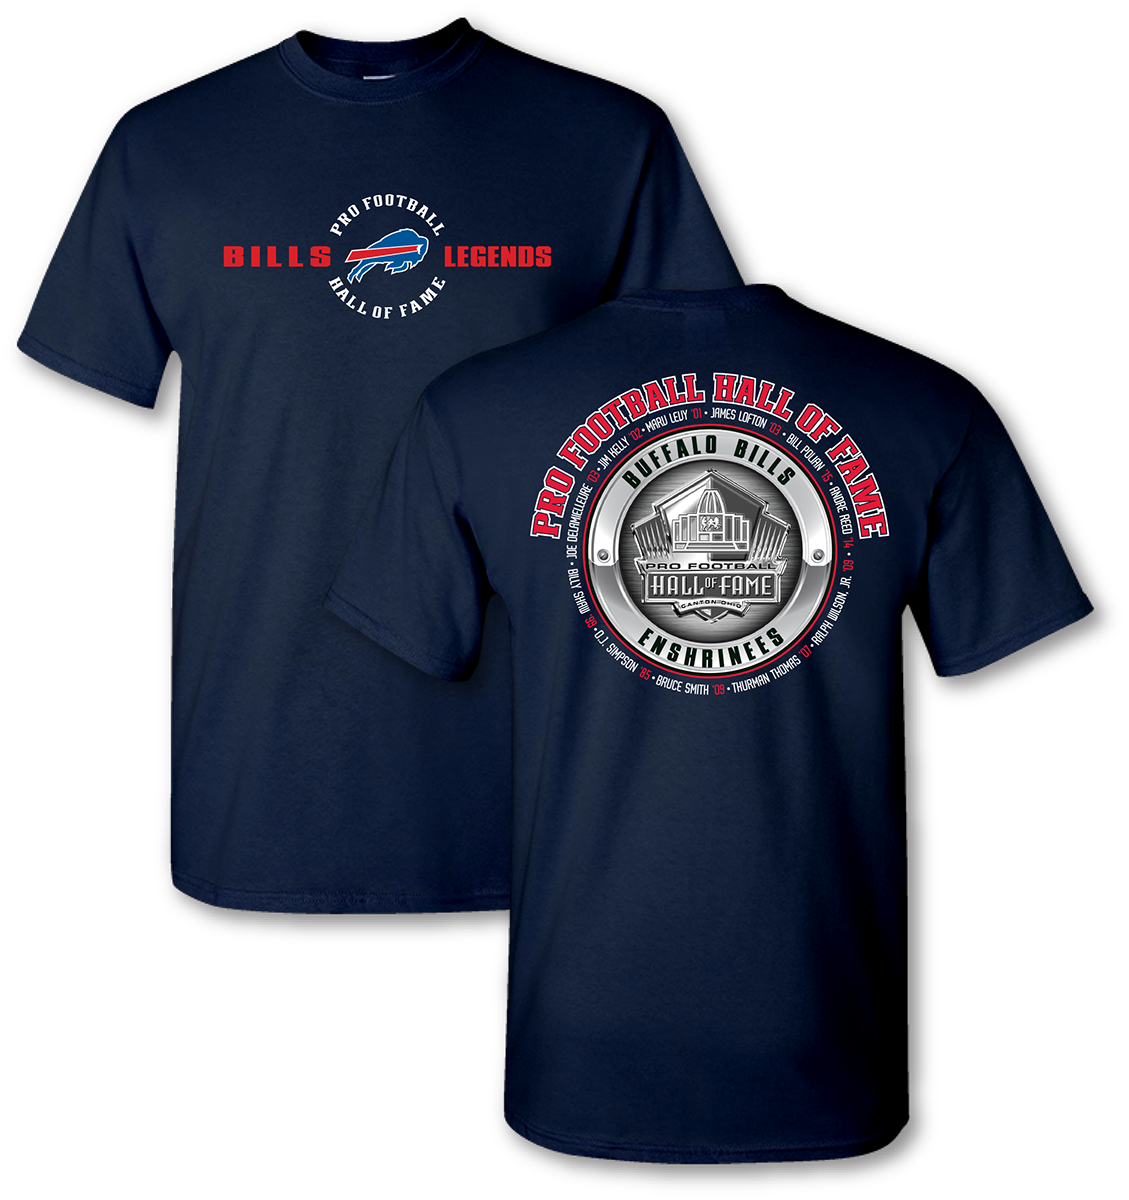 Bills Hall of Fame Legends T-Shirt